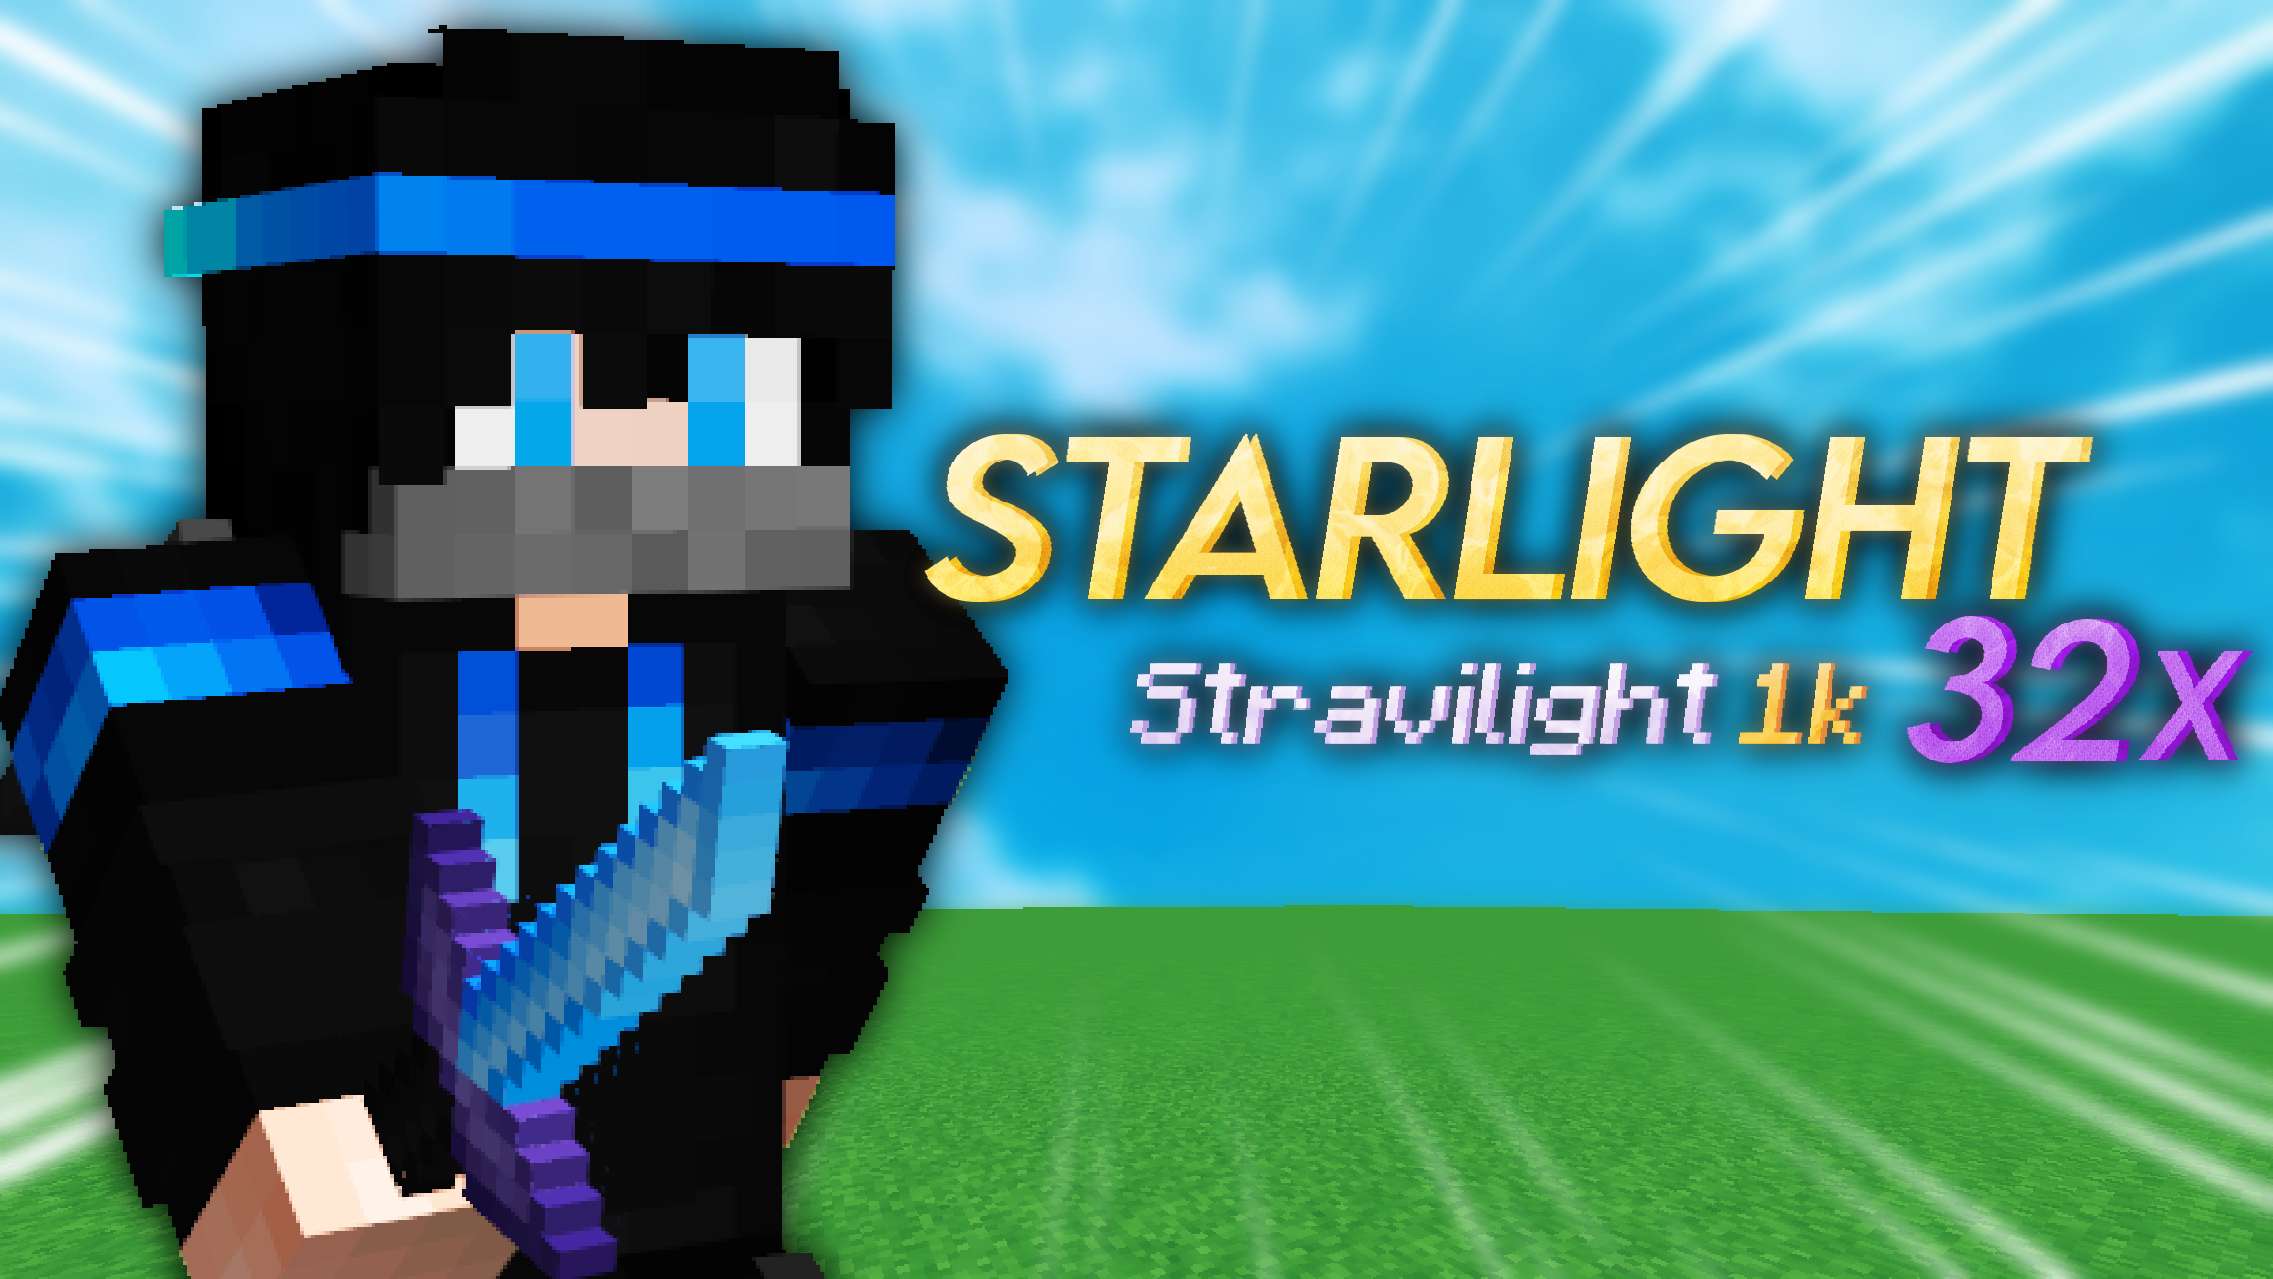 Starlight - (Stravilight 1k) 32x by Mqryo on PvPRP